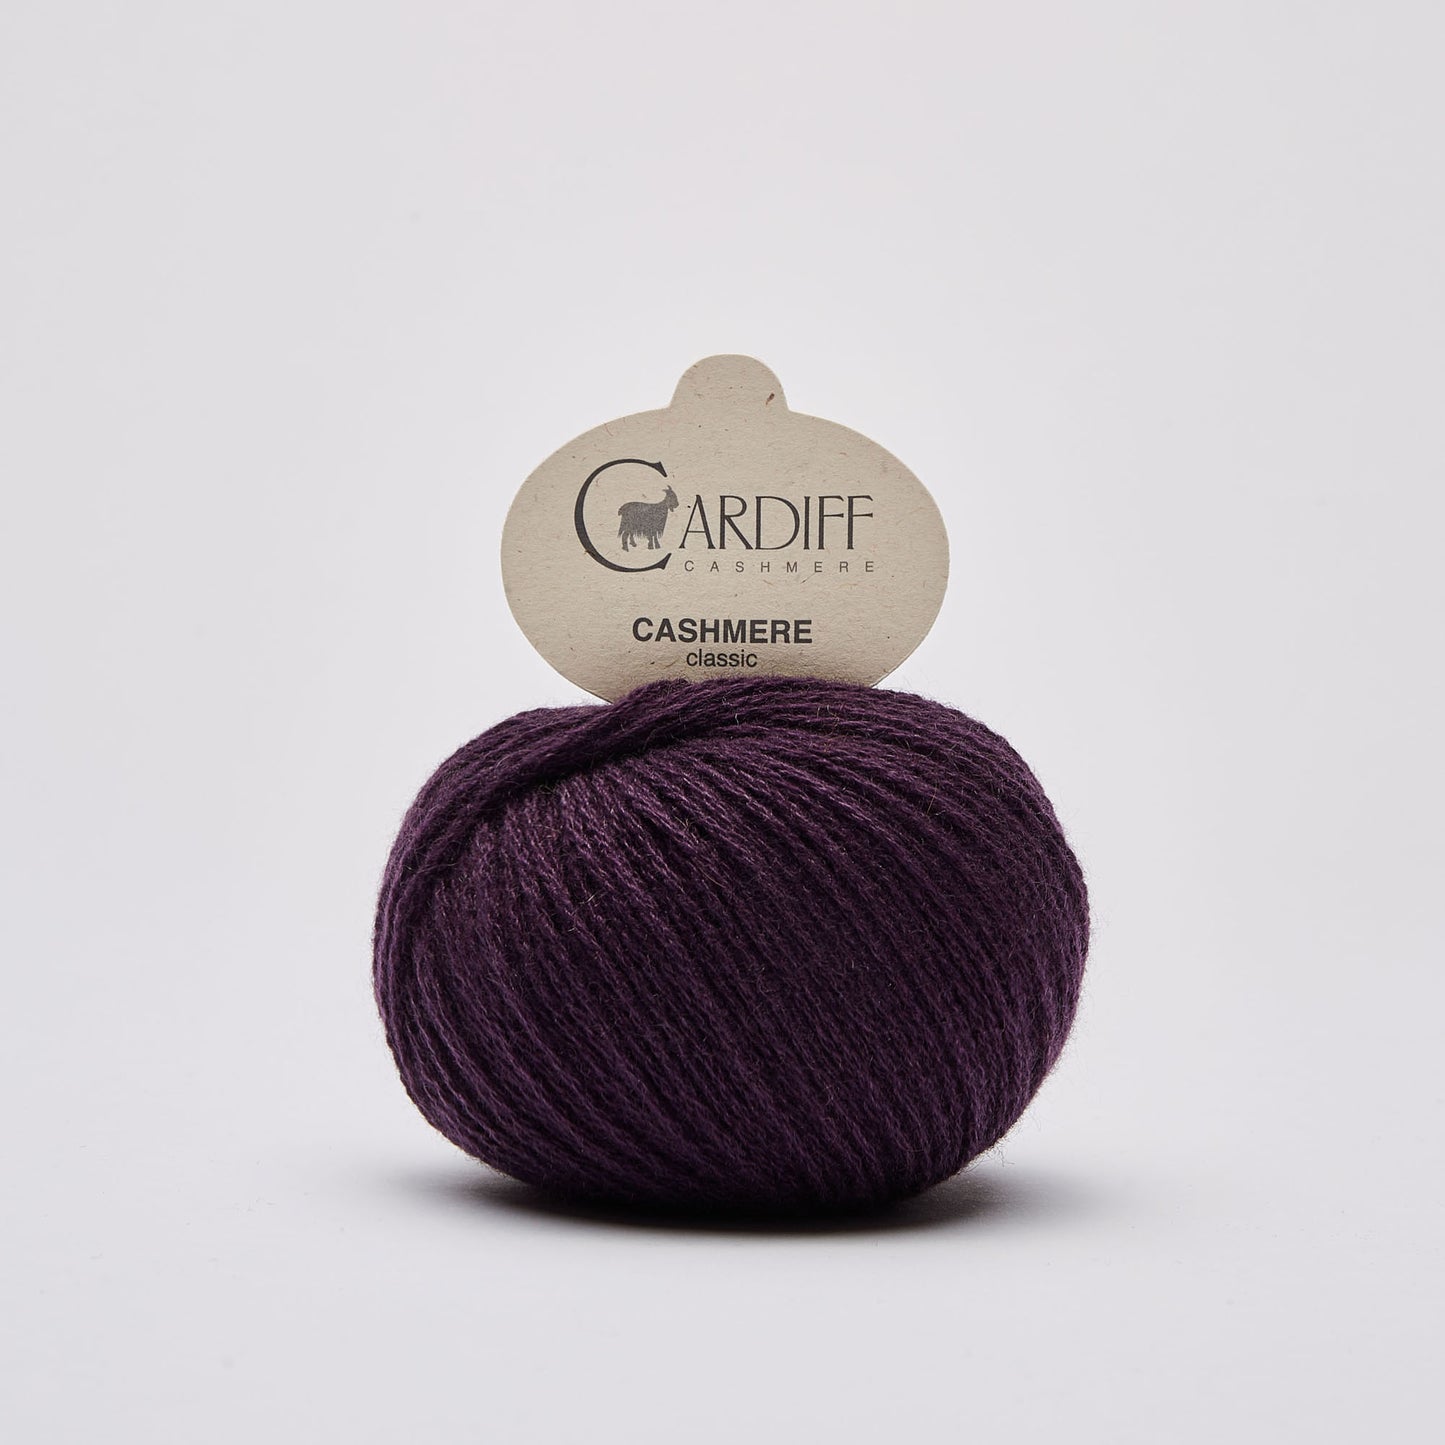 Cardiff CLASSIC gentle yarn, 601, UVA, comp: 100% Cashmere